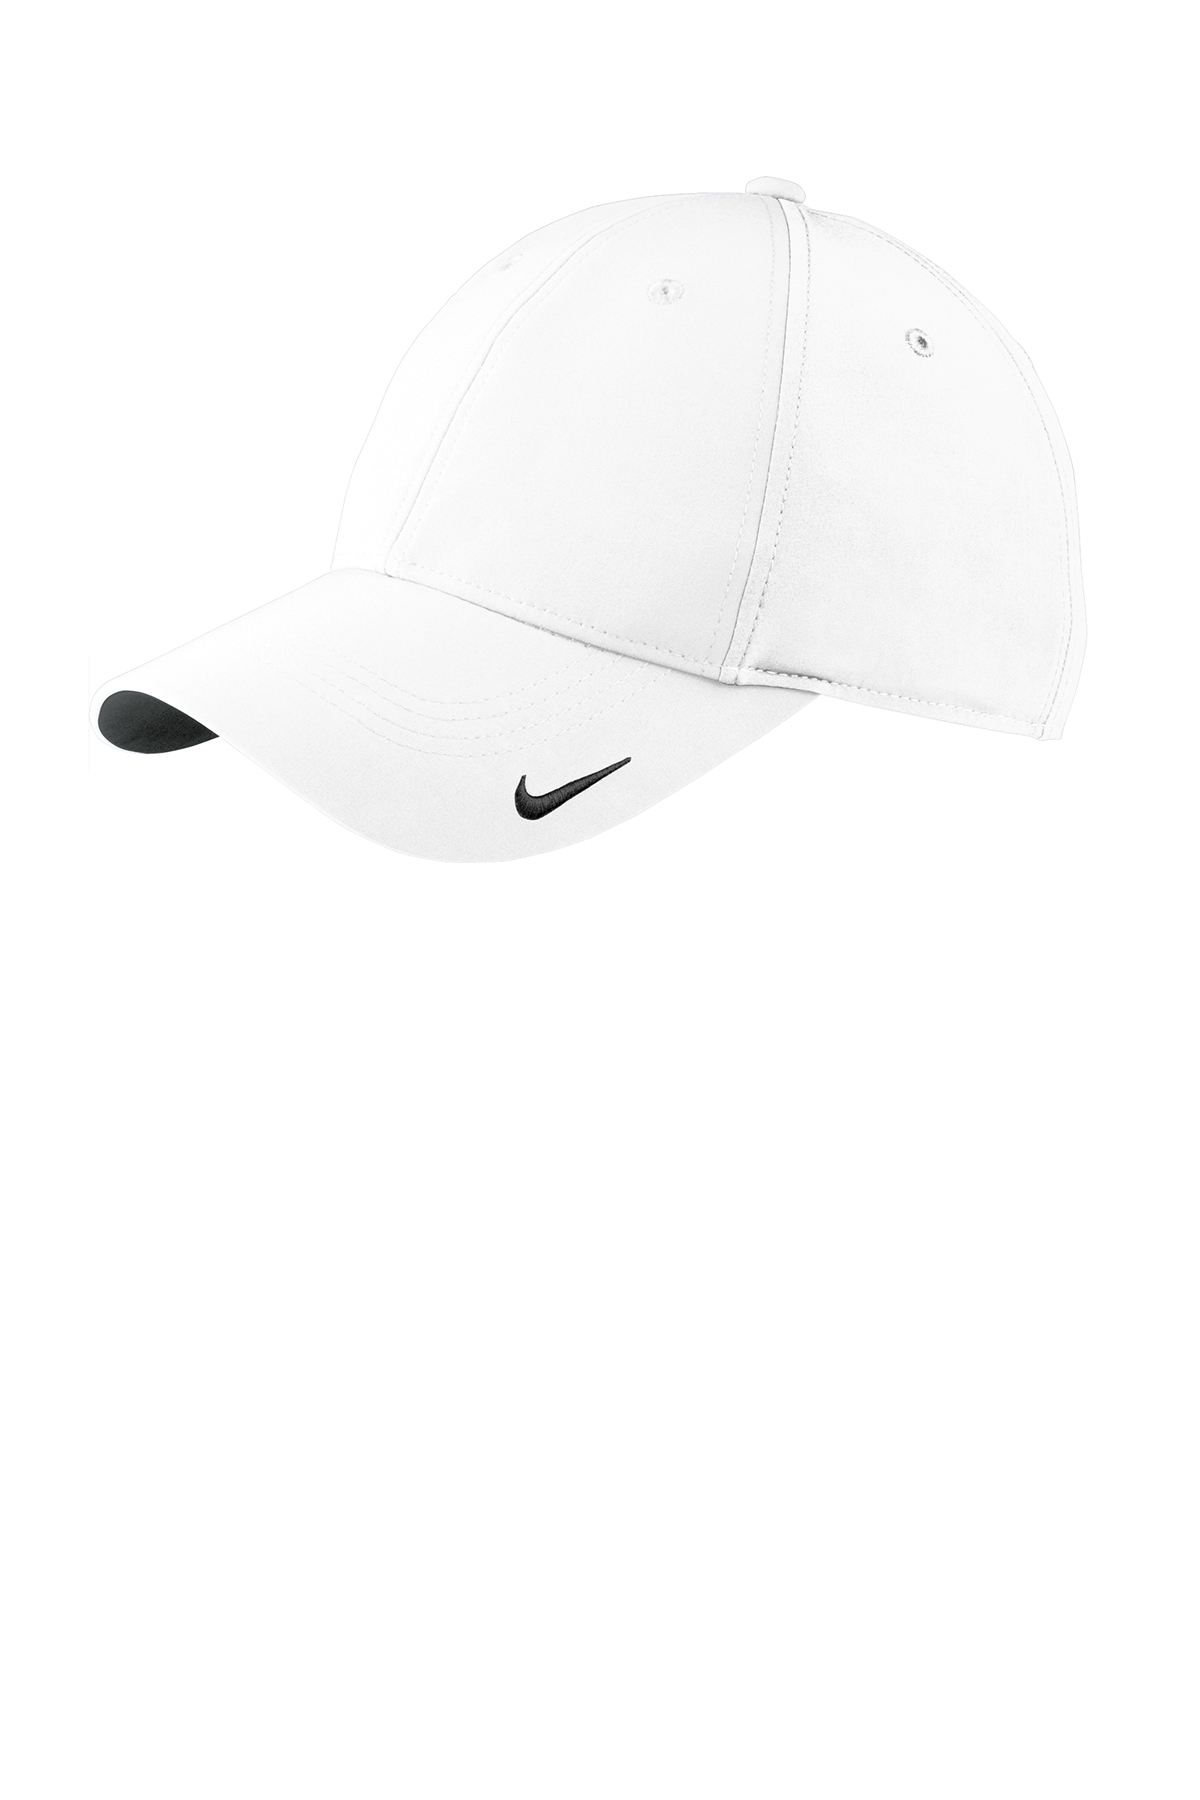 Nike Swoosh Legacy 91 Cap - The Monogram Company